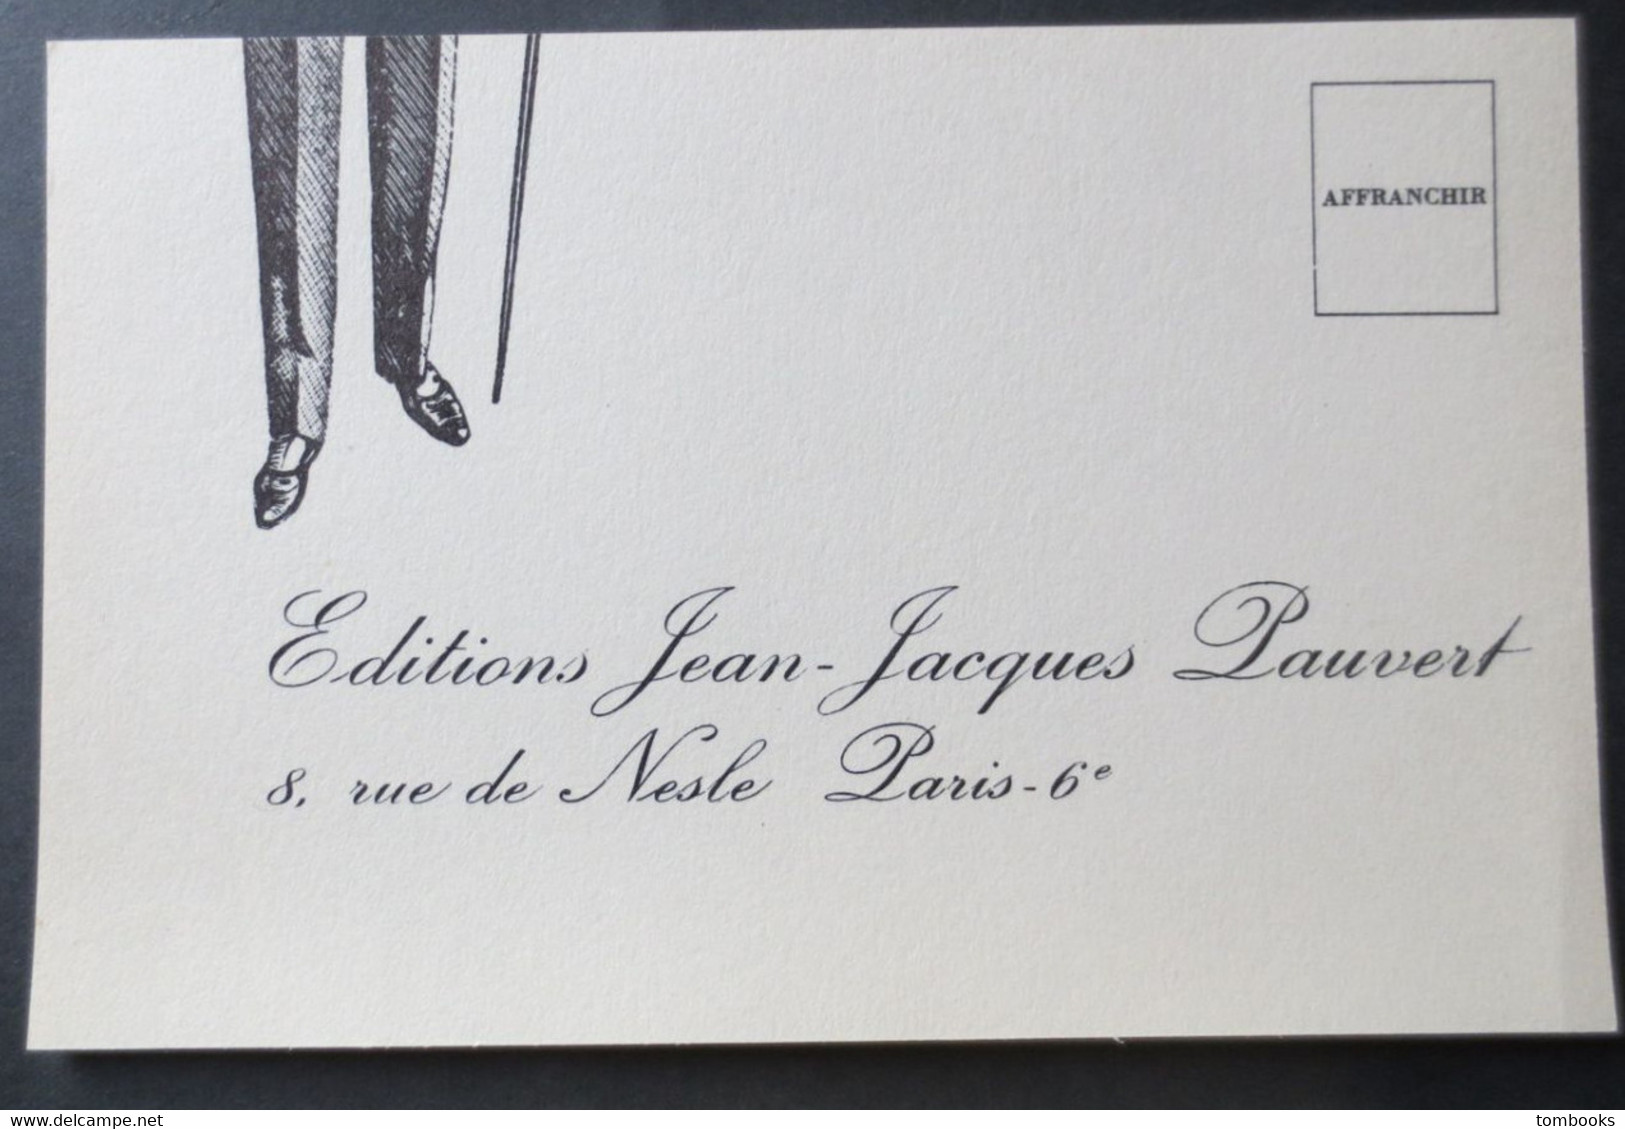 Ylipe - Aqua Toffana - Petit Livre Dessins Originaux - Philippe Labarthe - Aux éditions Jean - Jacques Pauvert - 1962 - - Disegni Originali